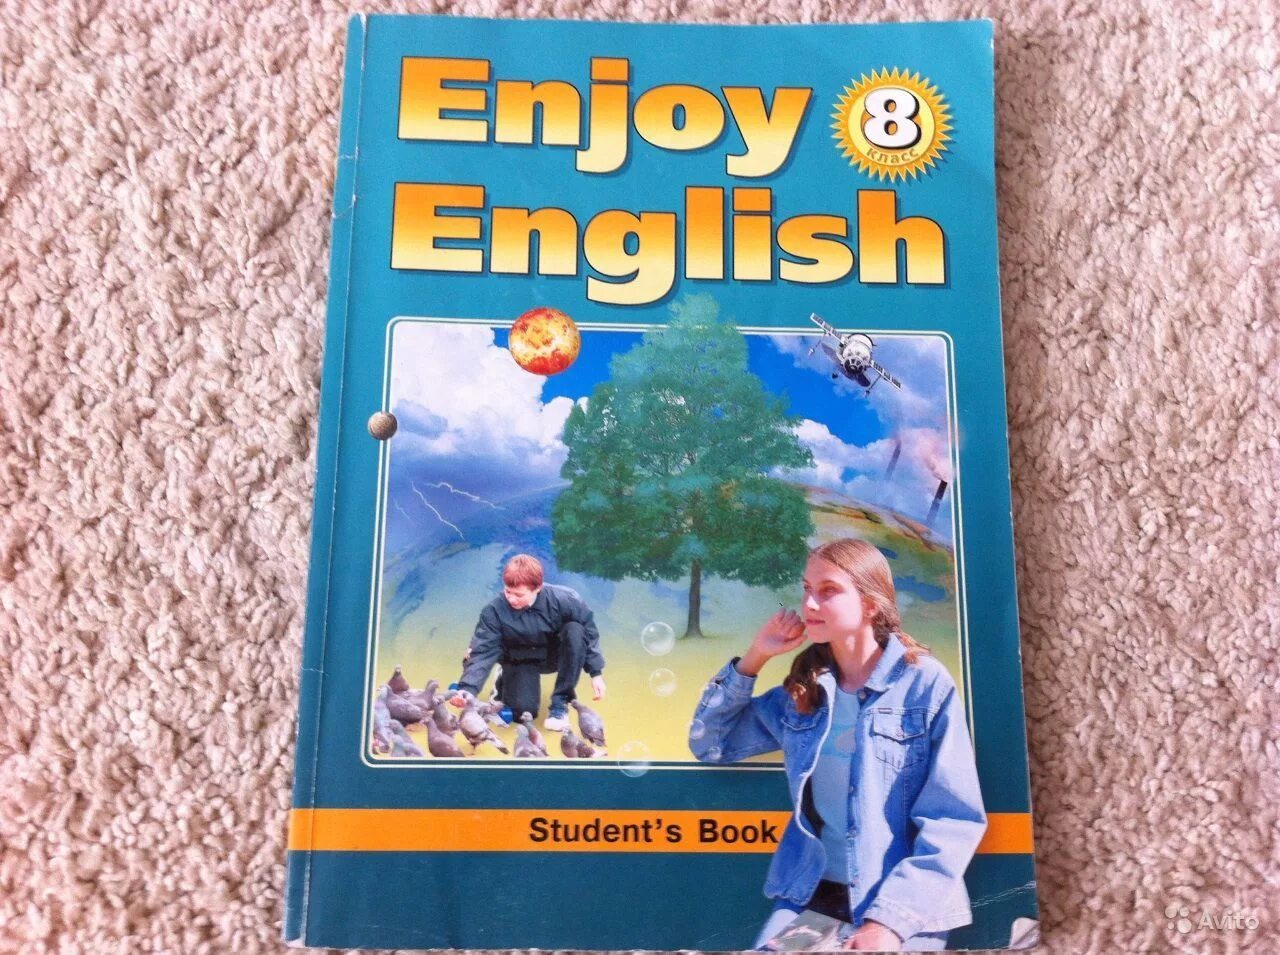 Английский 8 класс. Учебник английского языка биболетова. Enjoy English 8 класс. Учебник английского языка 8 класс. Английский язык 8 класс биболетова.